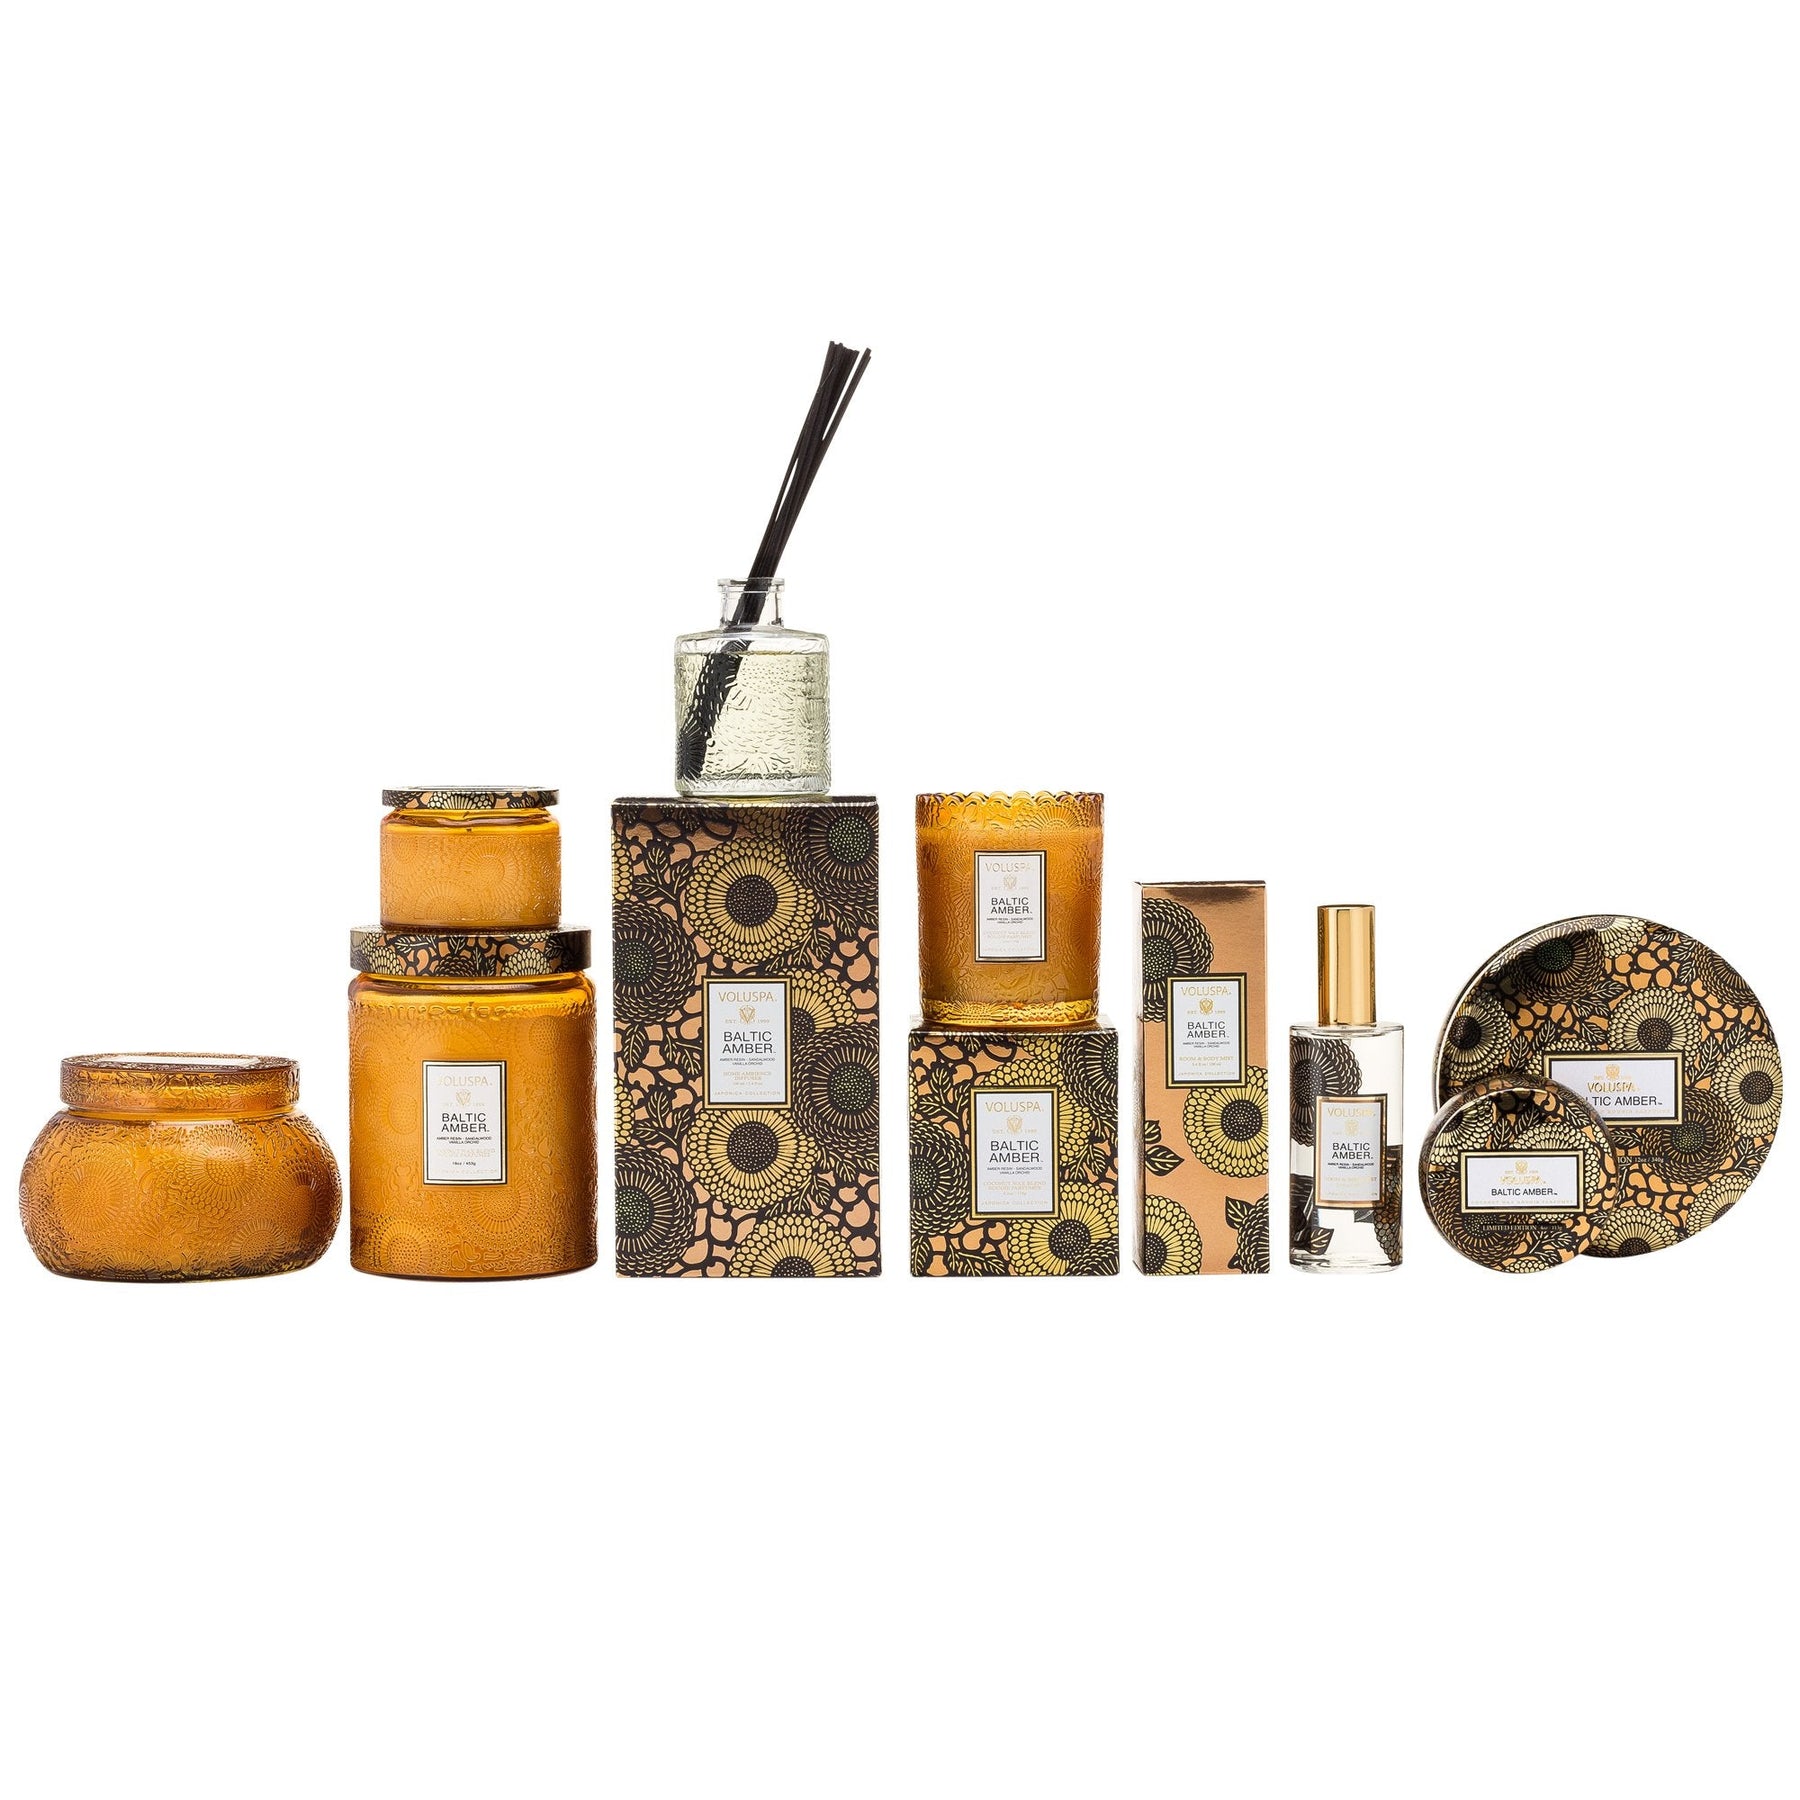 Baltic Amber - Large Jar Candle